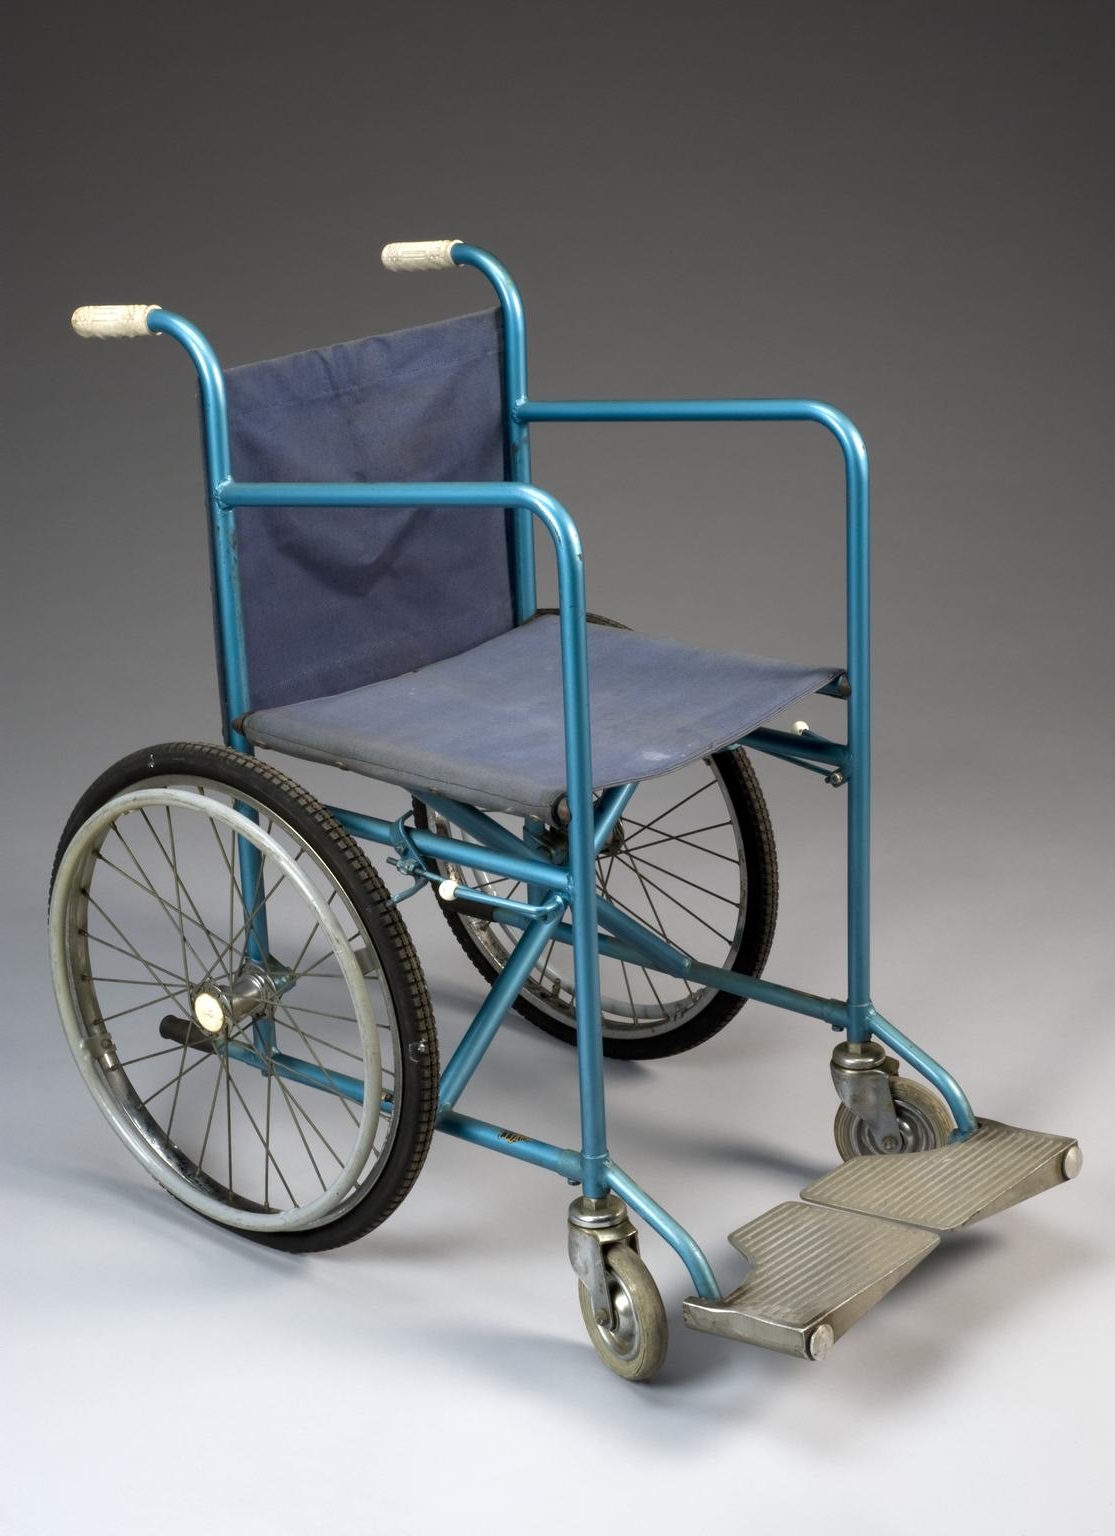 A photo of a blue Model X wheelchair